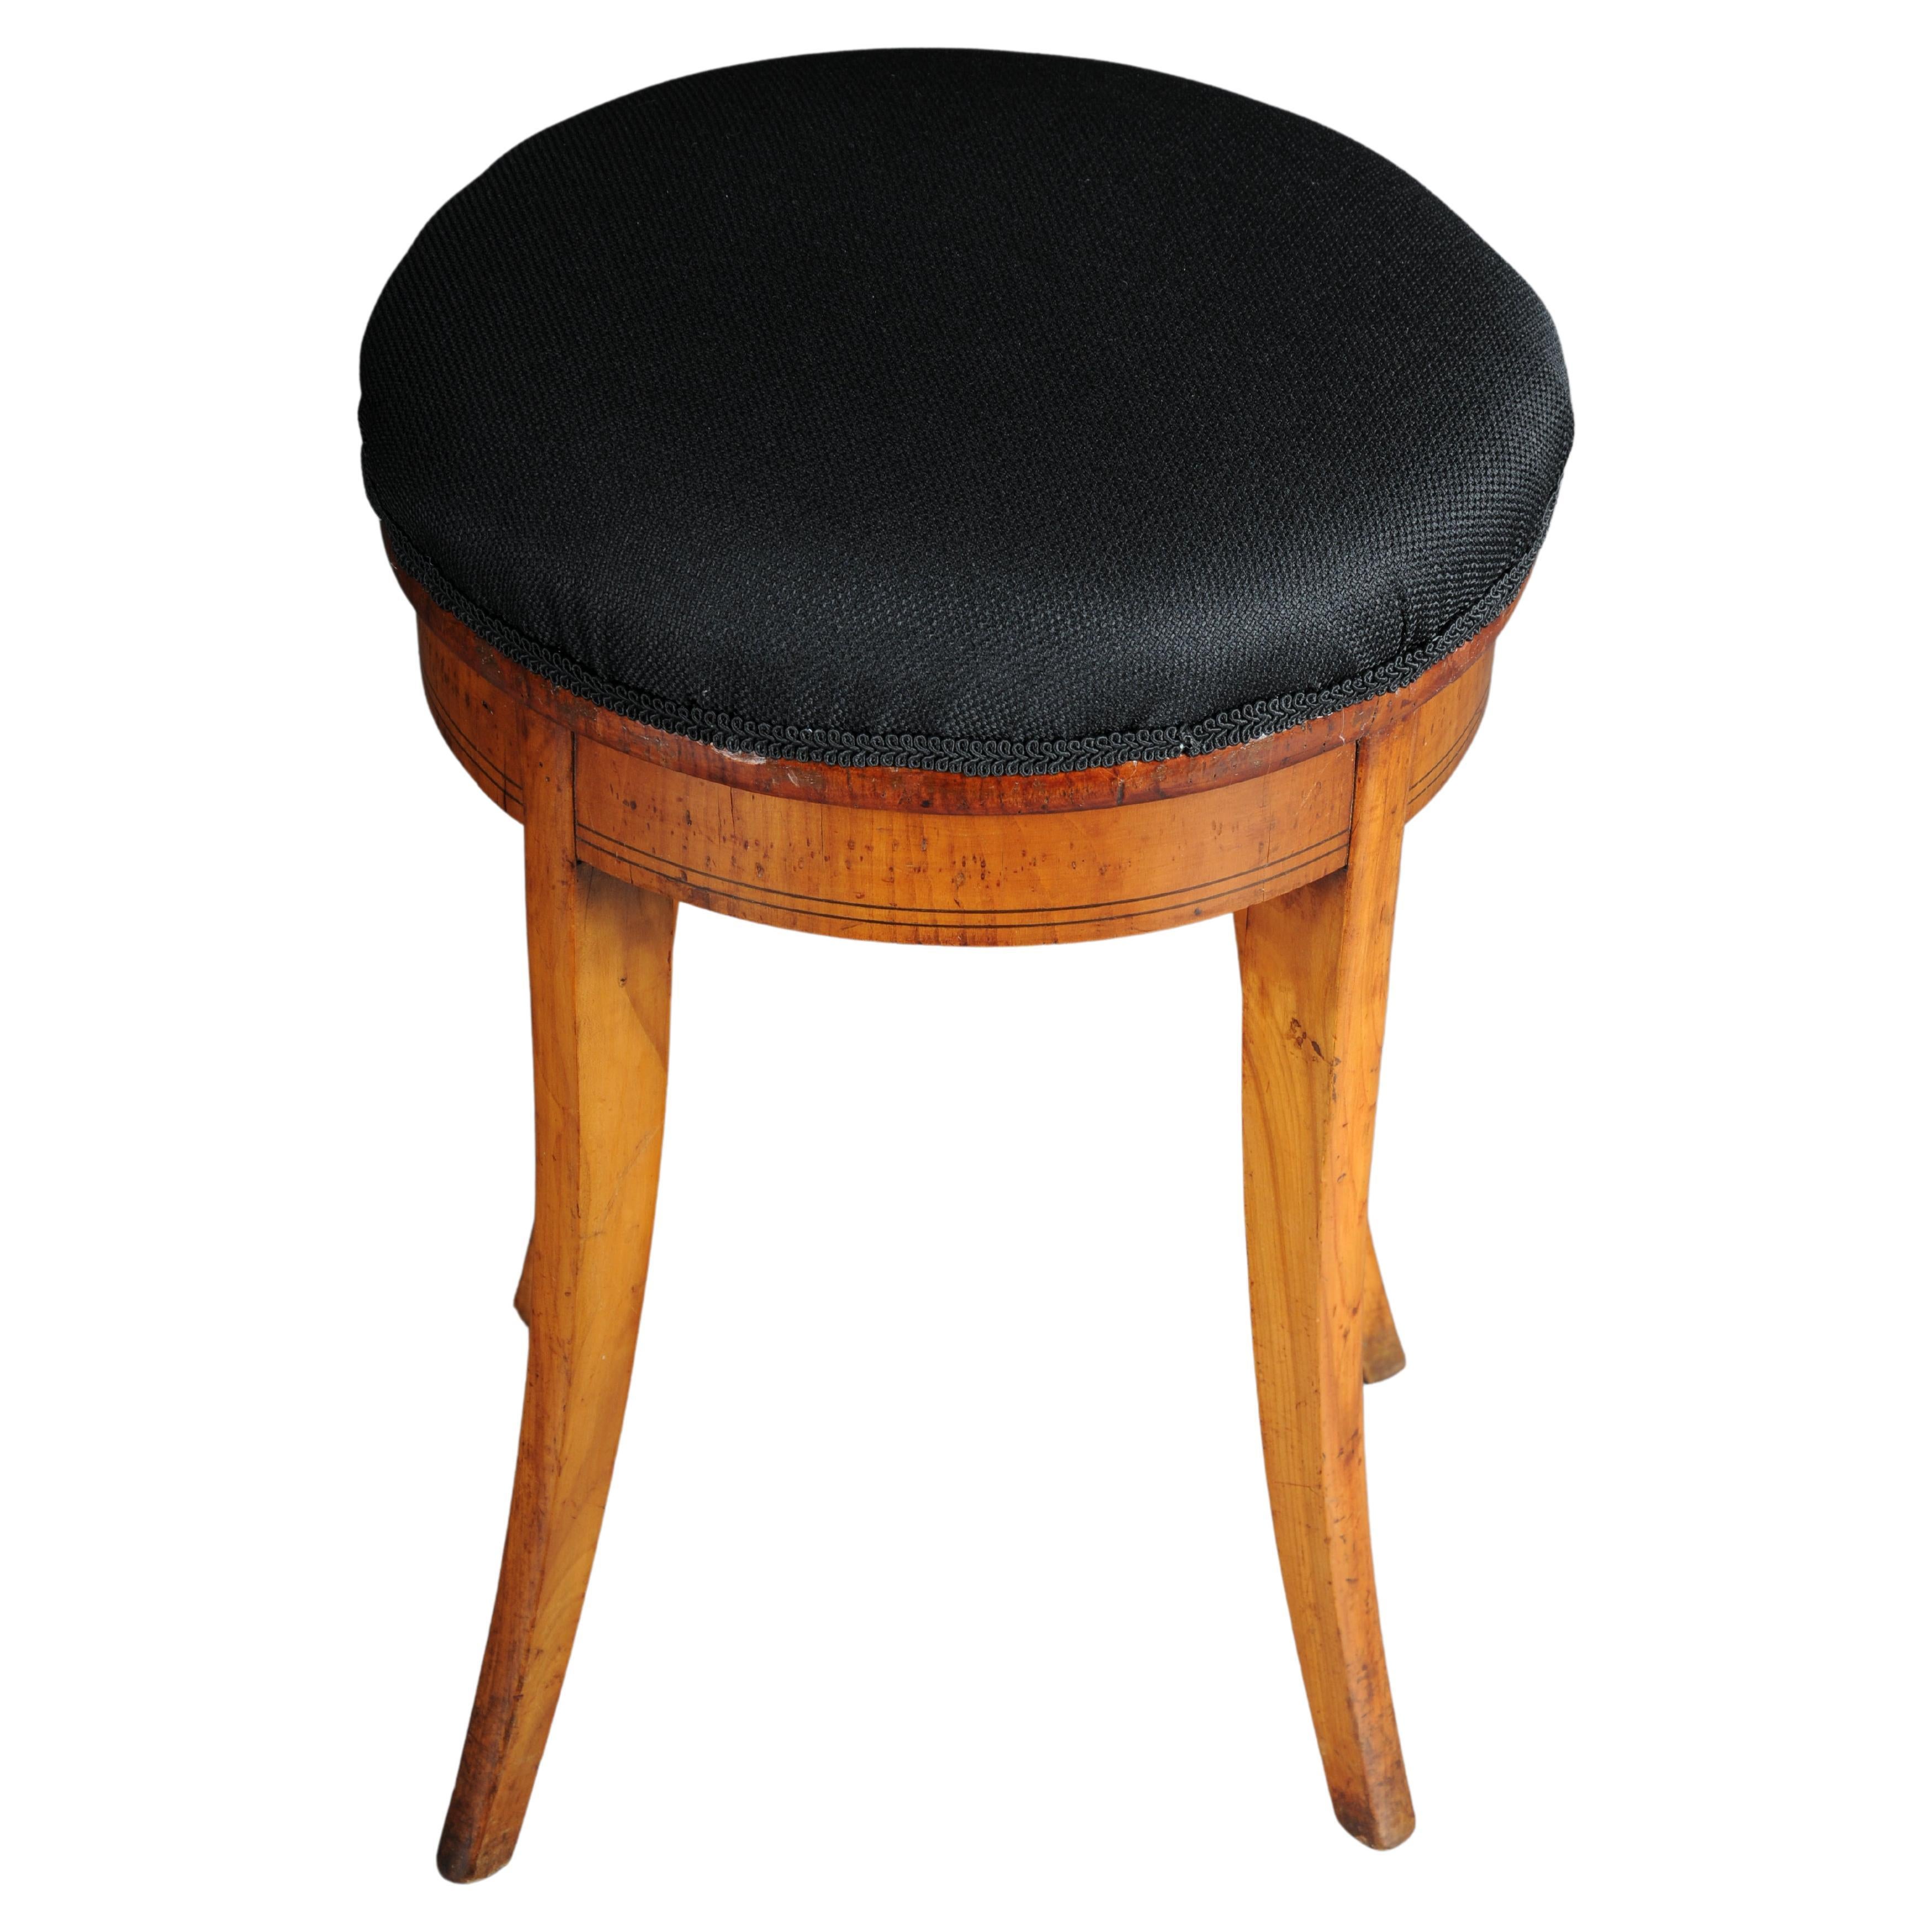 19th Century Beautiful antique stool, cherry wood